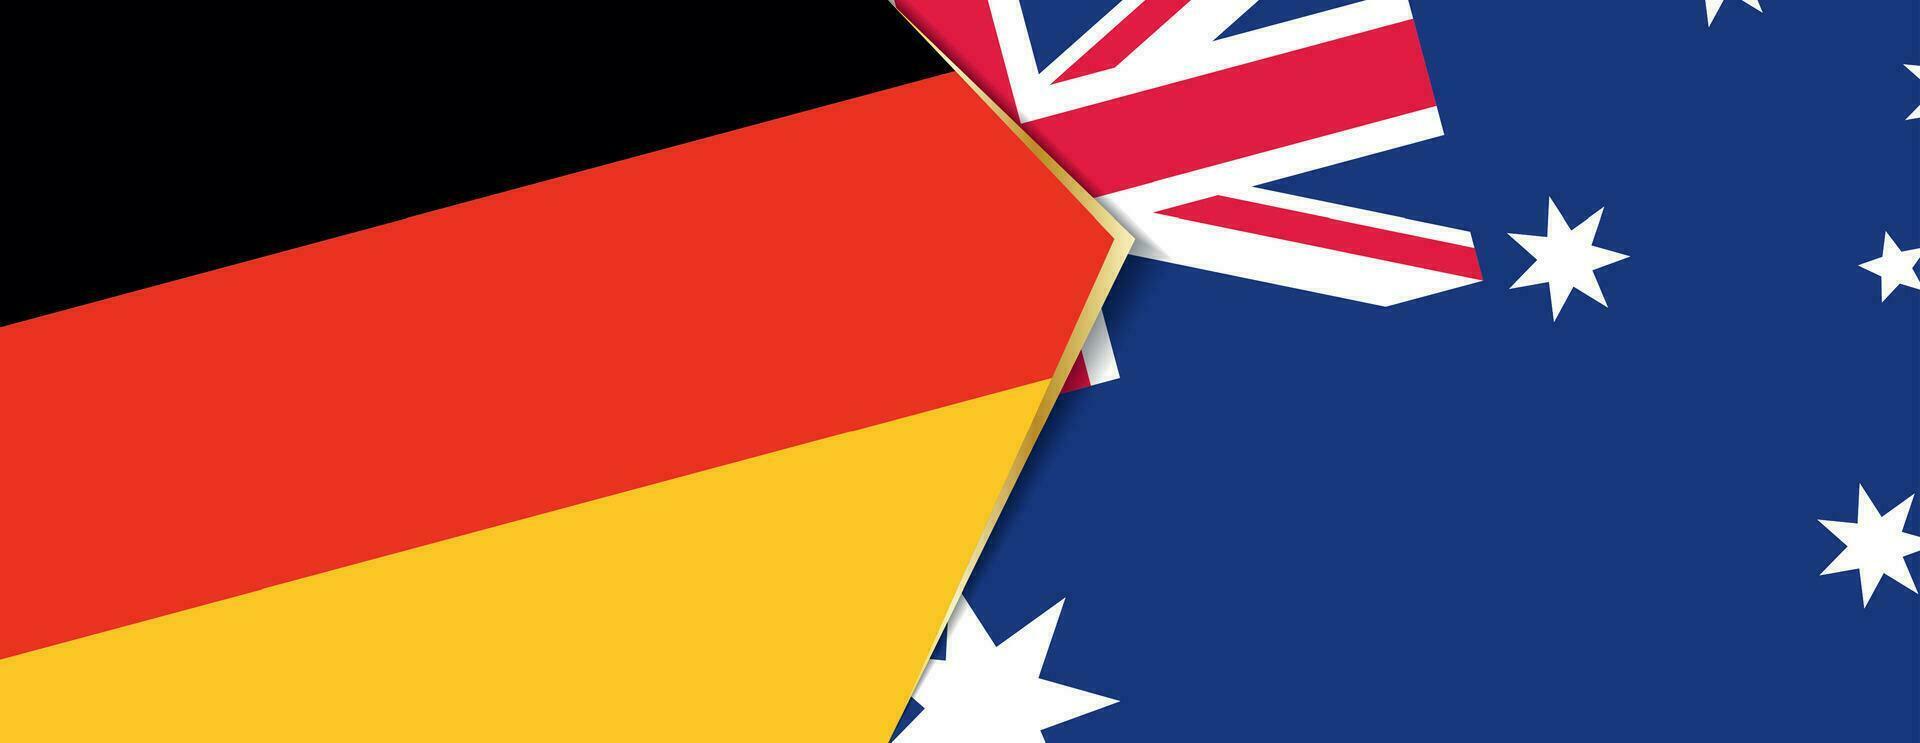 Alemanha e Austrália bandeiras, dois vetor bandeiras.